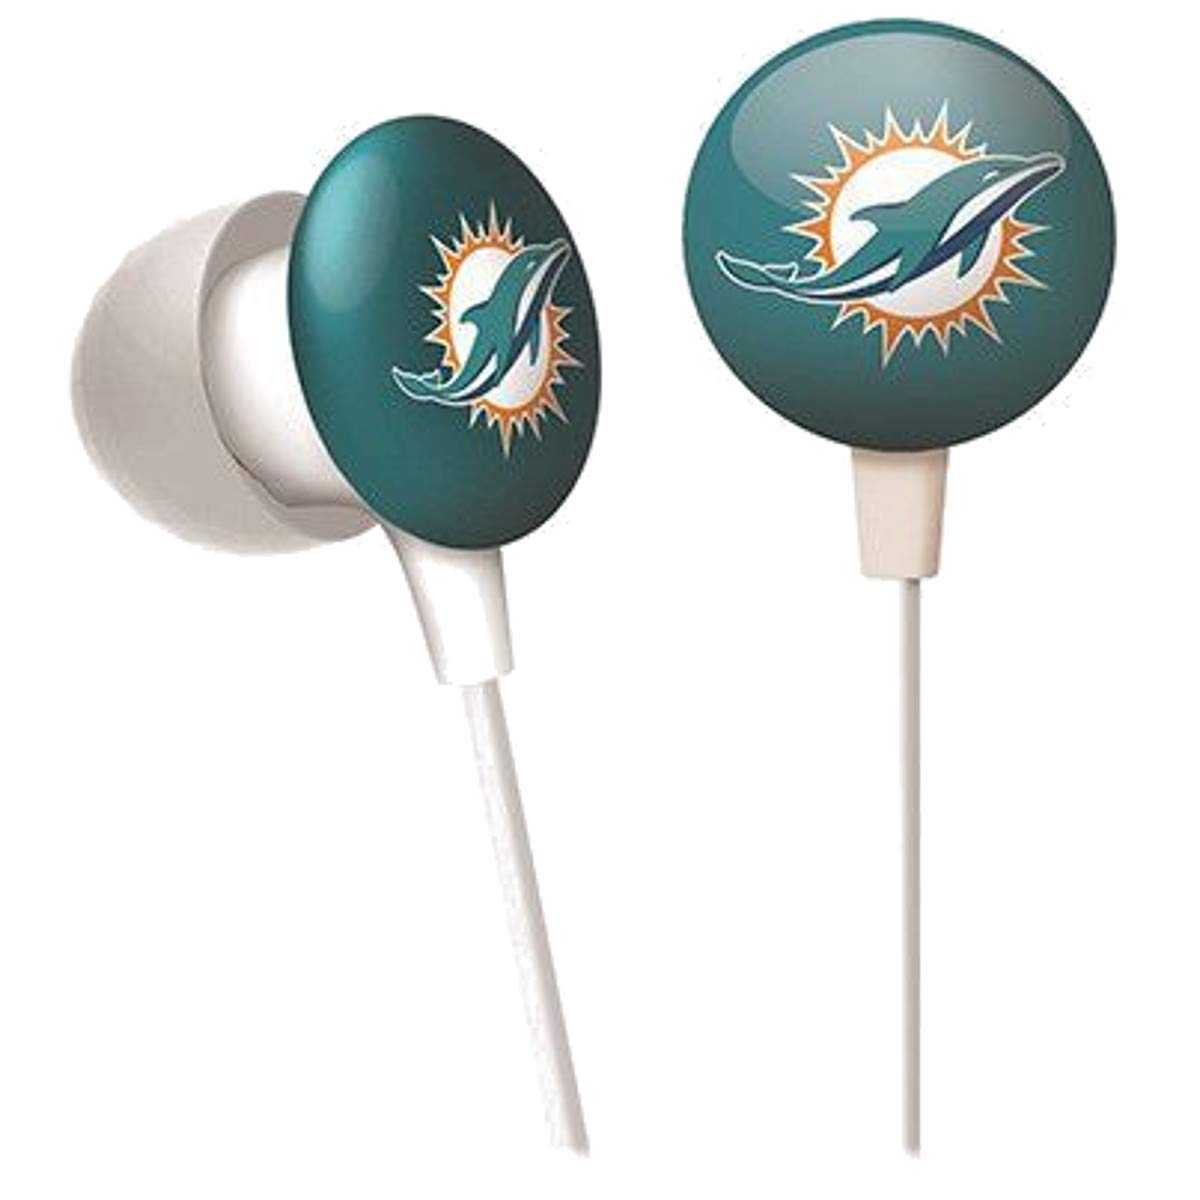 iHip Official National Football League Fan Shop Authentic NFL Earbud Headphones